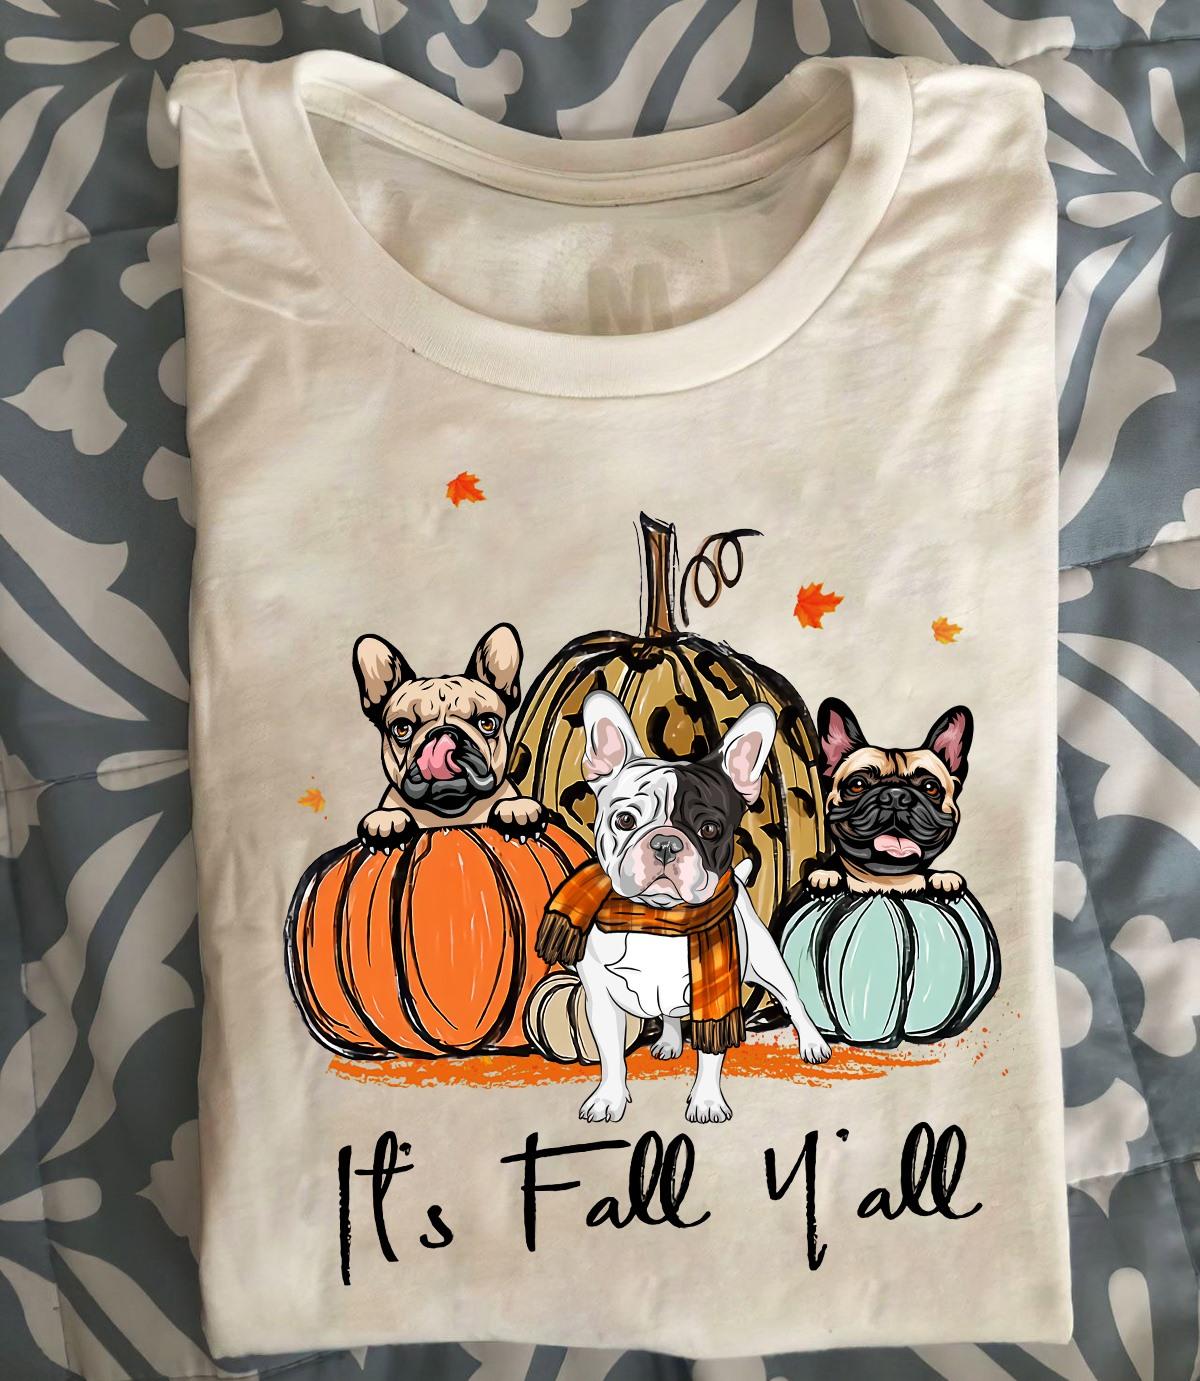 It's fall y'all - Fall wonderfull season, Thanksgiving gift, Frenchie and pumpkins